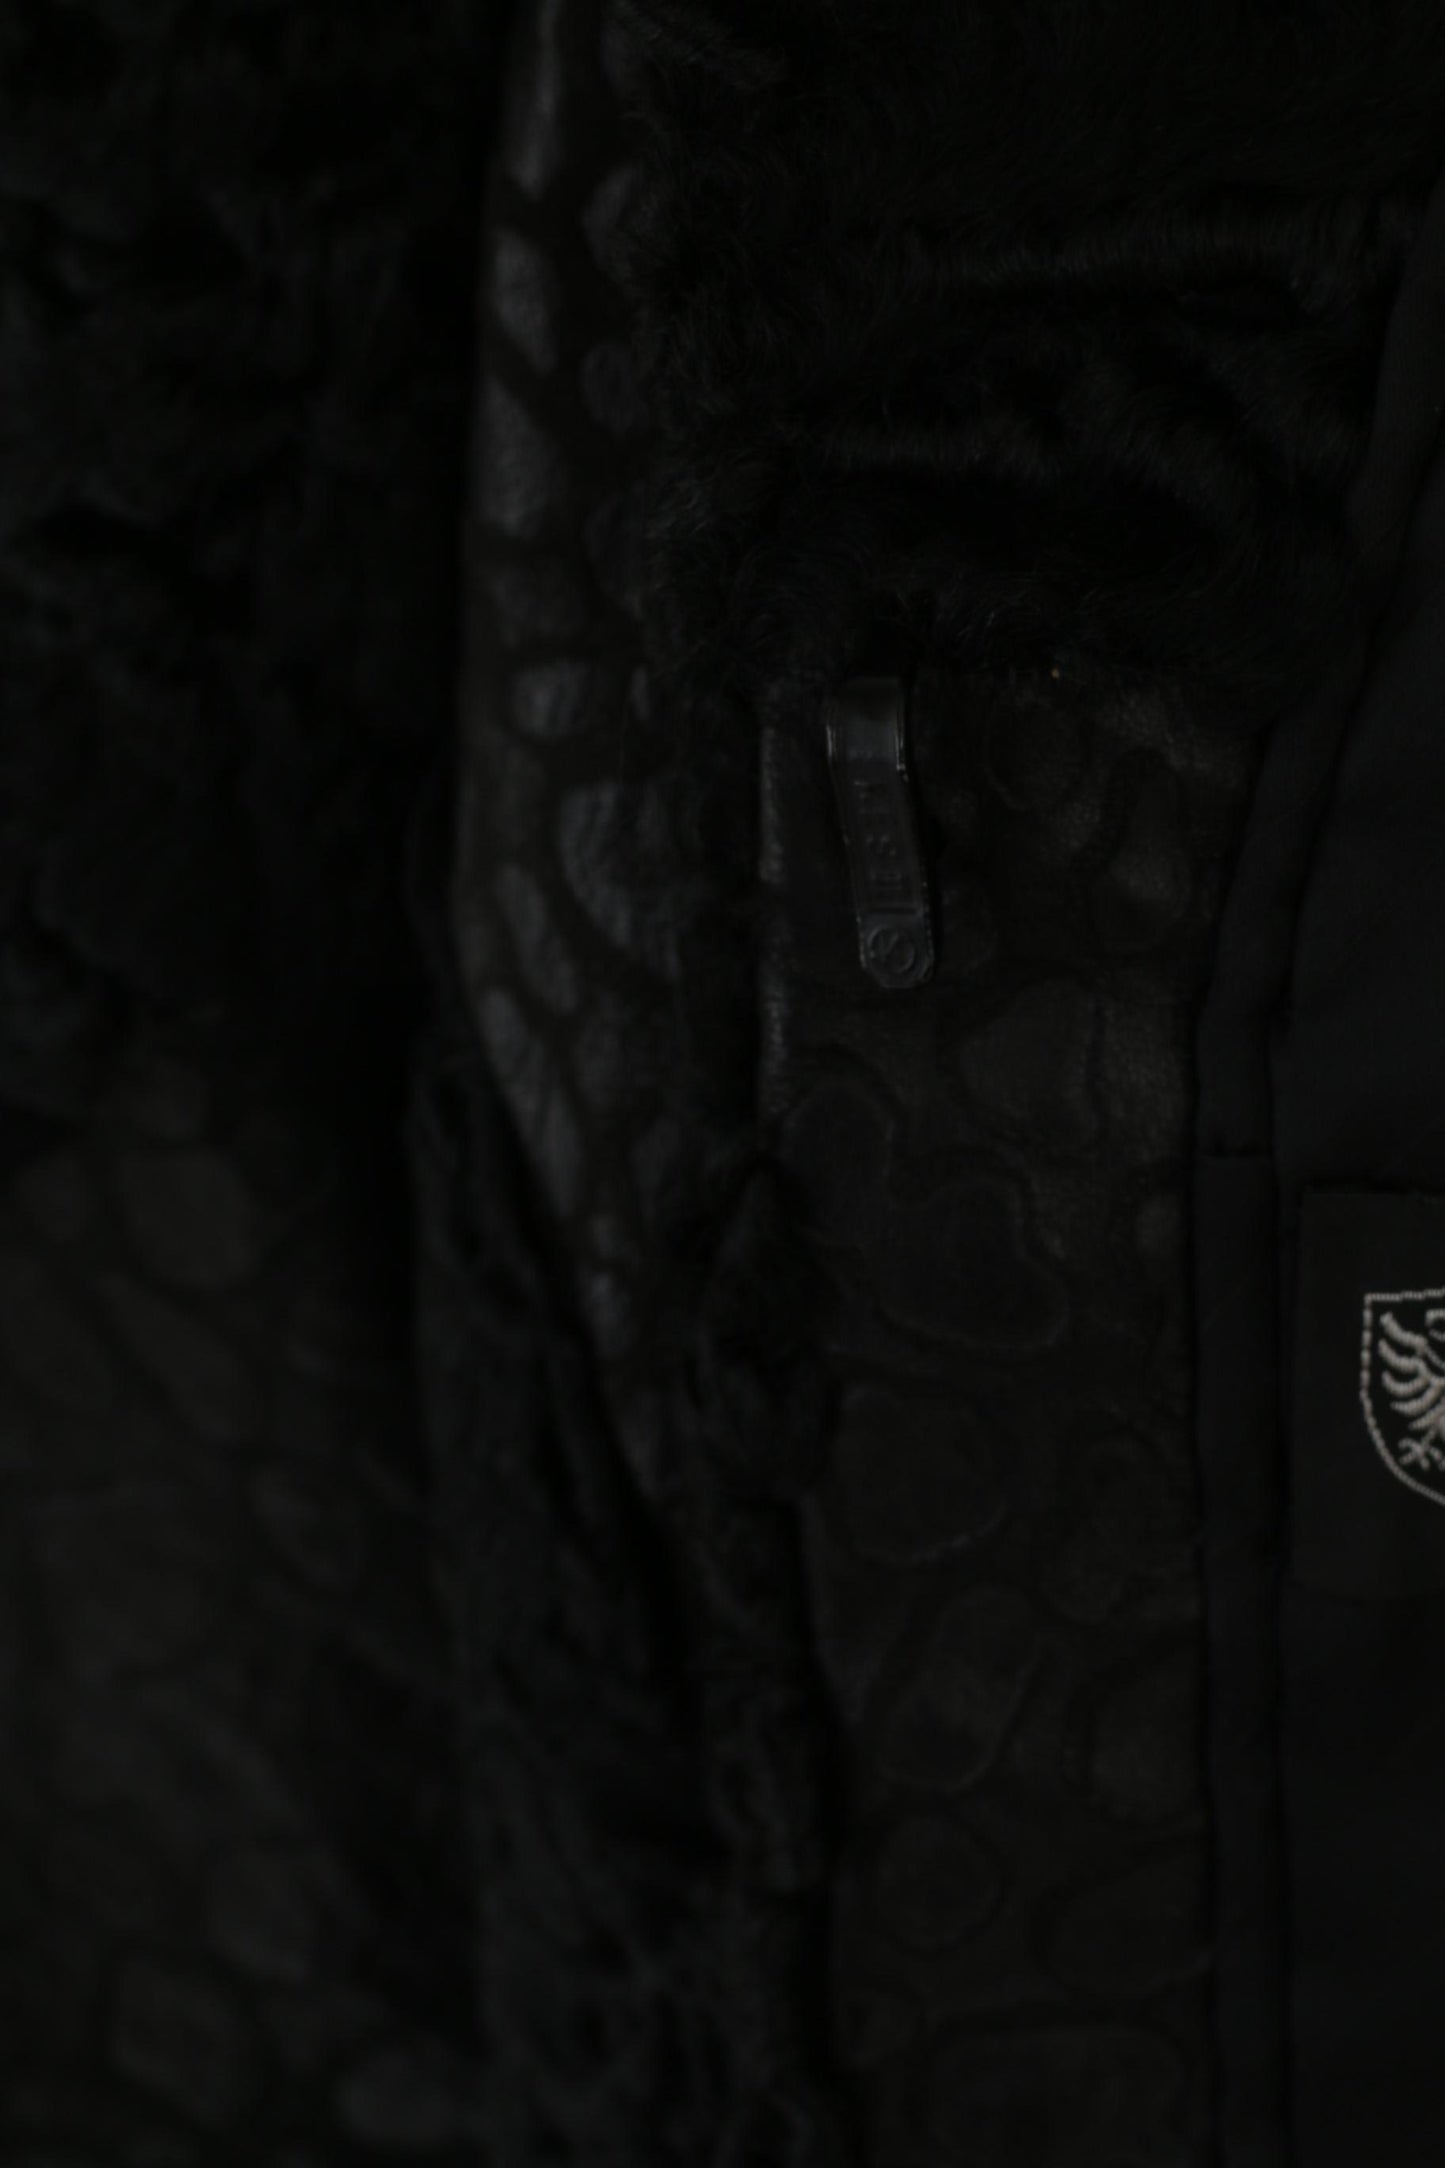 Pelz Greiner Nurnberg Women XL Coat Black Pelt Fur Karakul Leather Vintage Overcoat